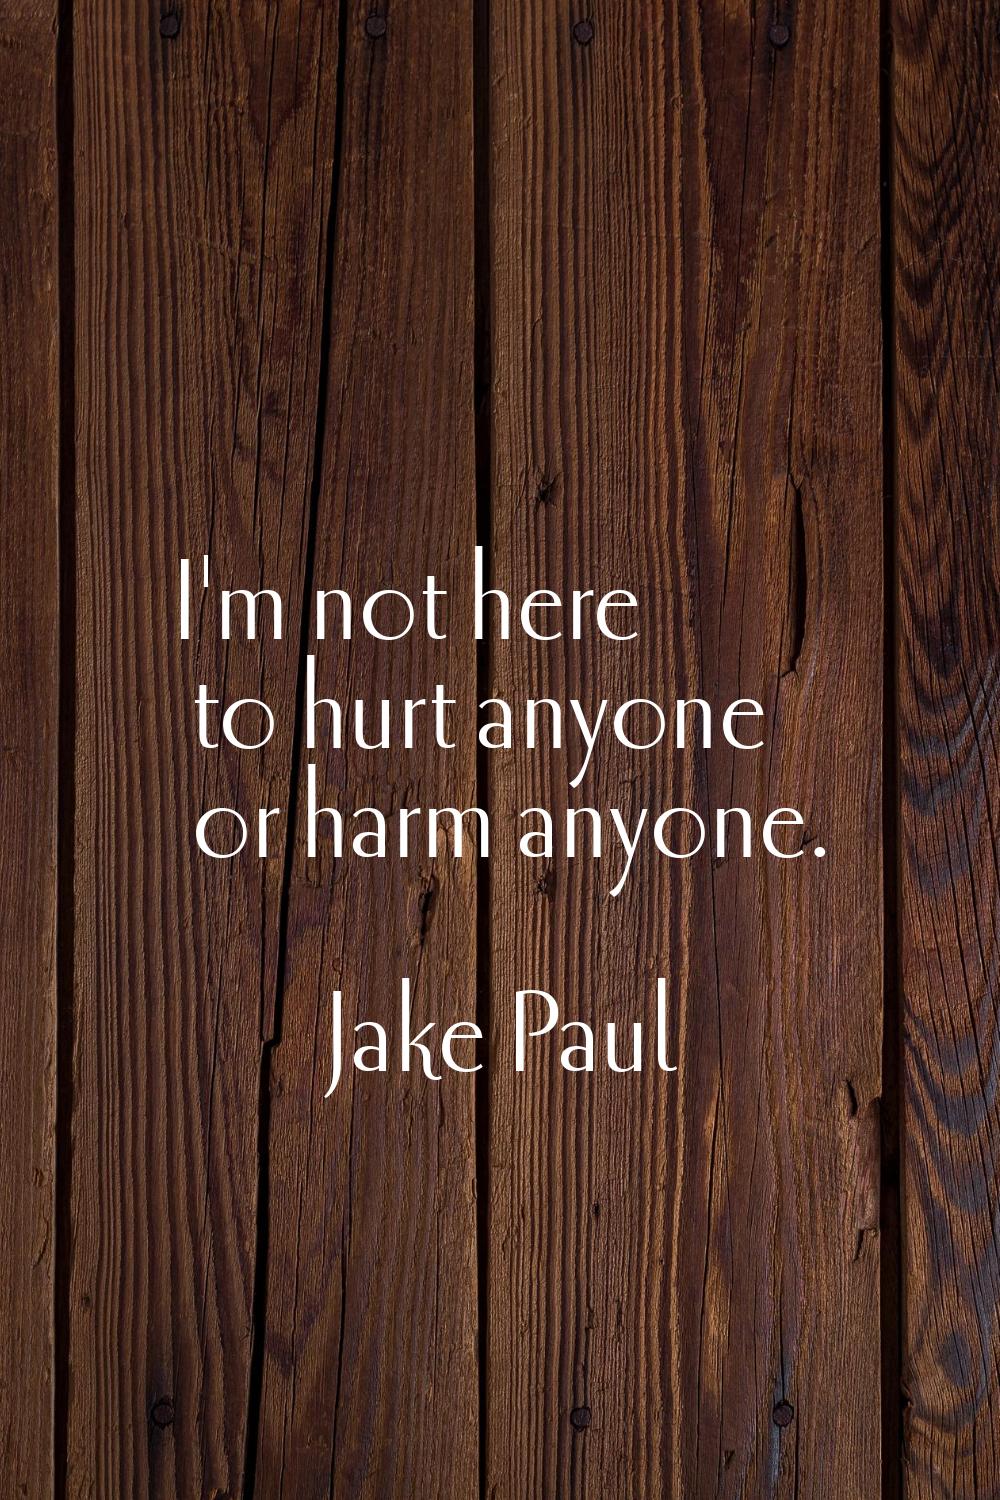 I'm not here to hurt anyone or harm anyone.